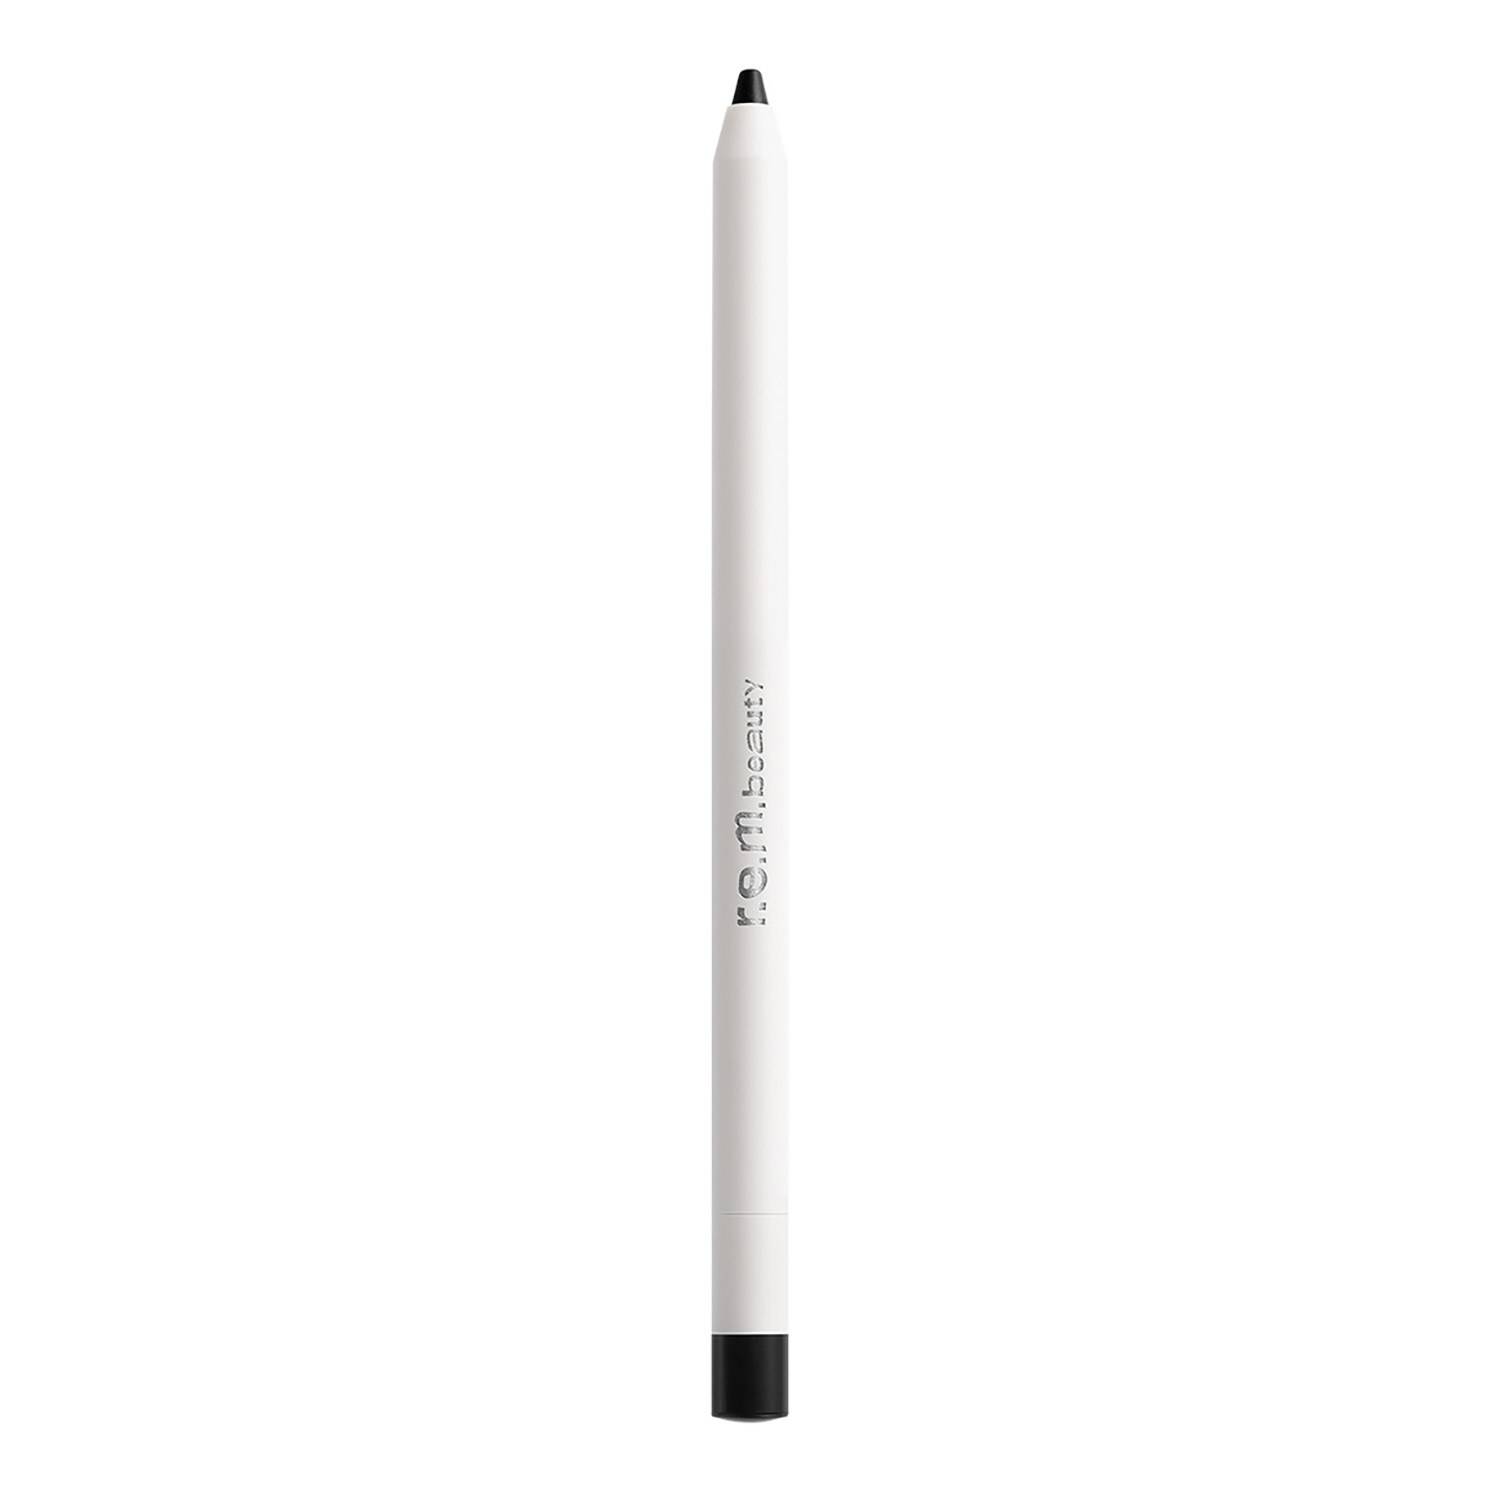 Rem Beauty At The Borderline Kohl Eyeliner Pencil 0.5G Midnight Black Bold Black